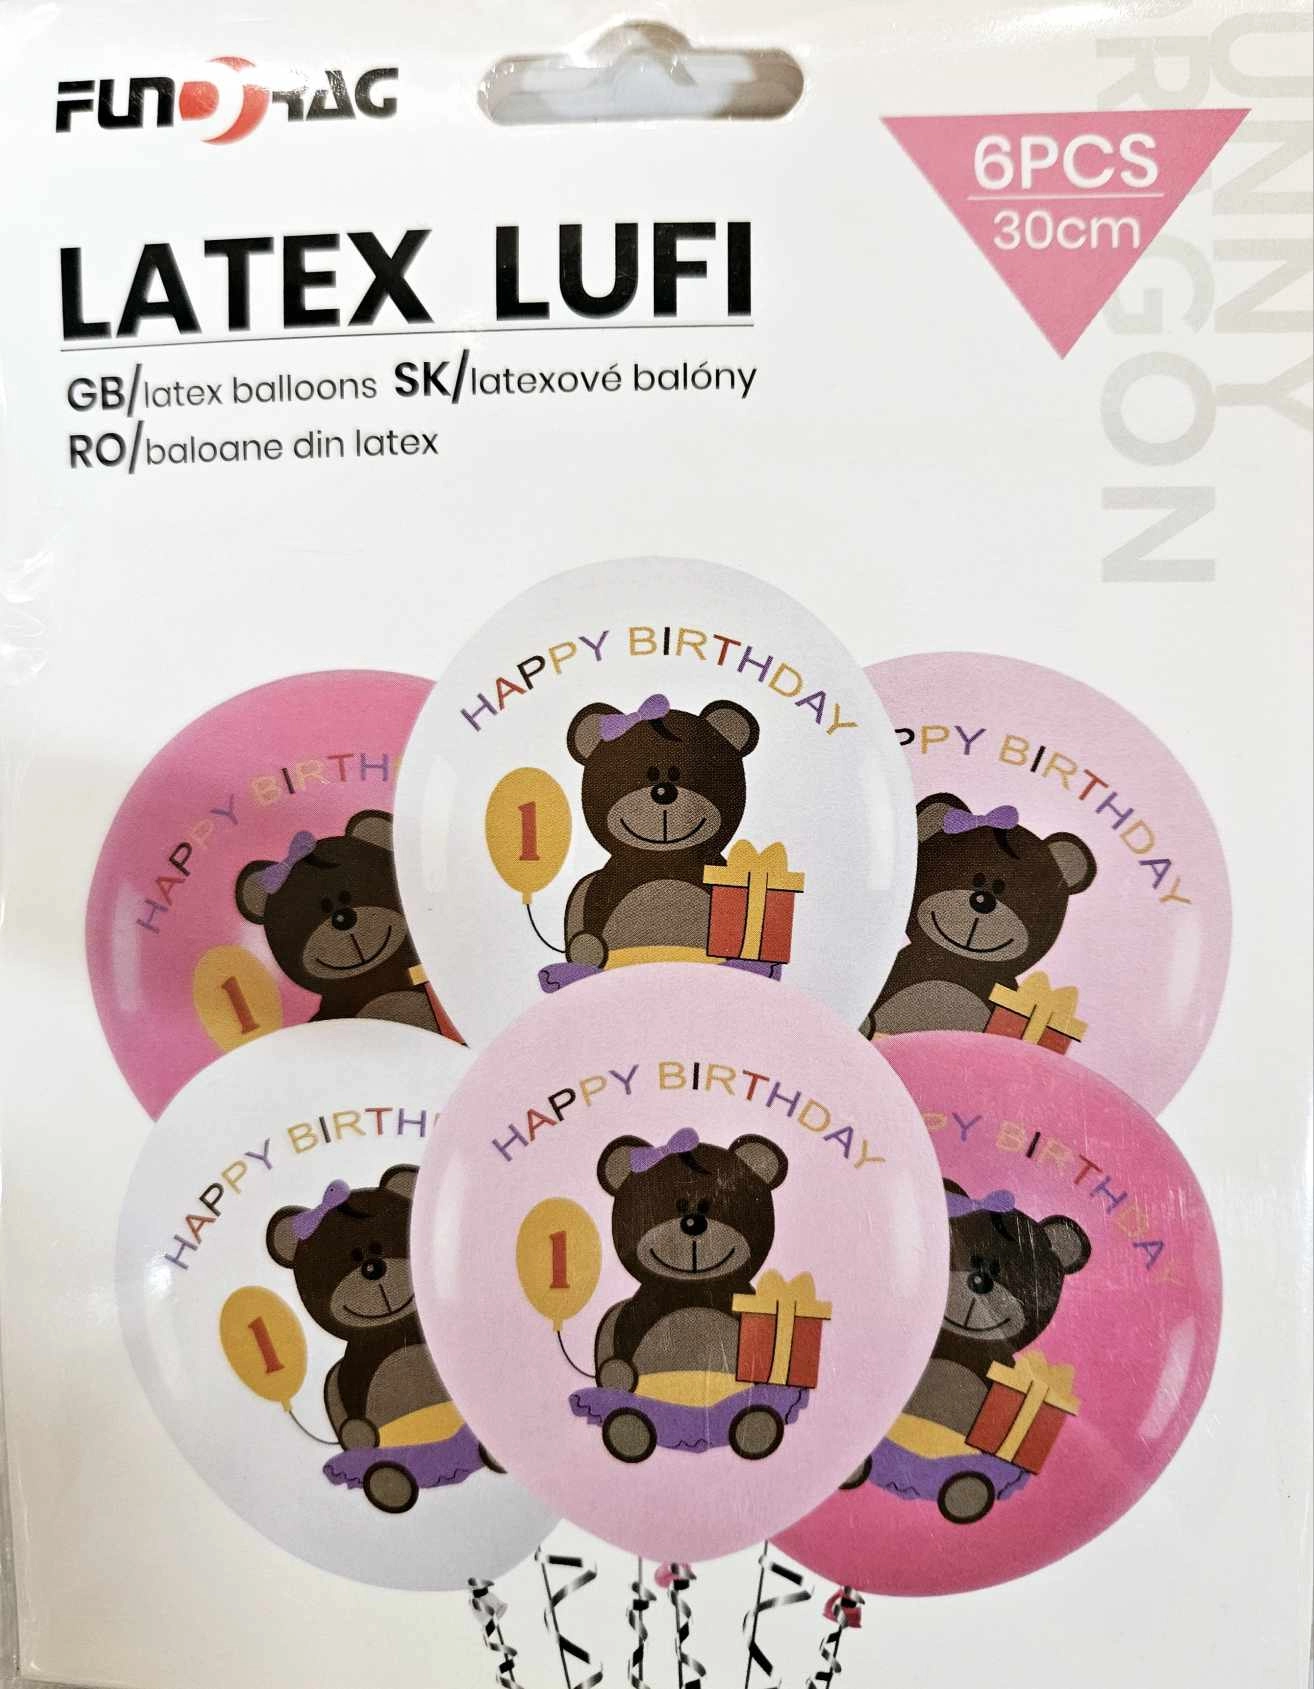 Happy birthday macis latex lufi 1 éves kislányos  6 db 